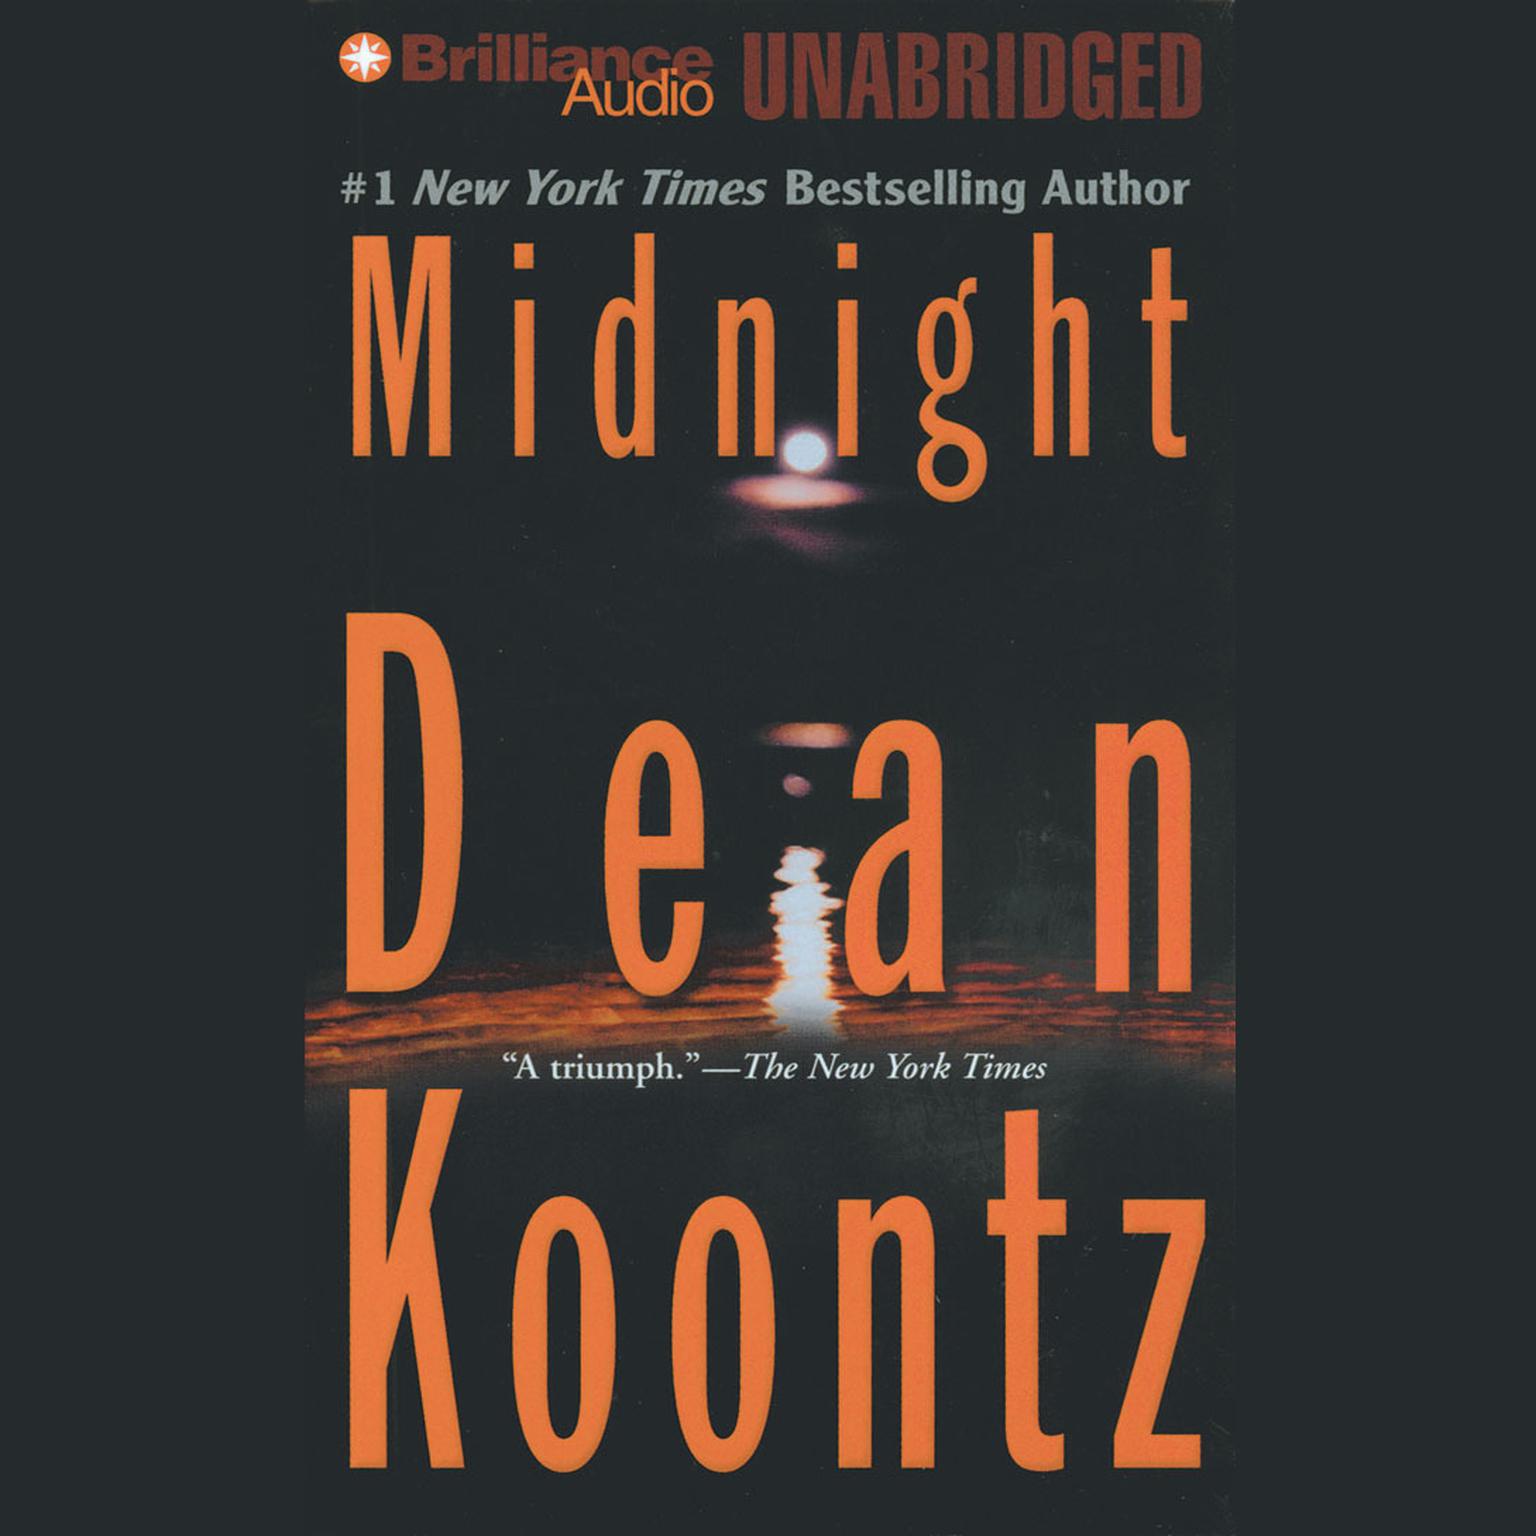 Midnight Audiobook, by Dean Koontz